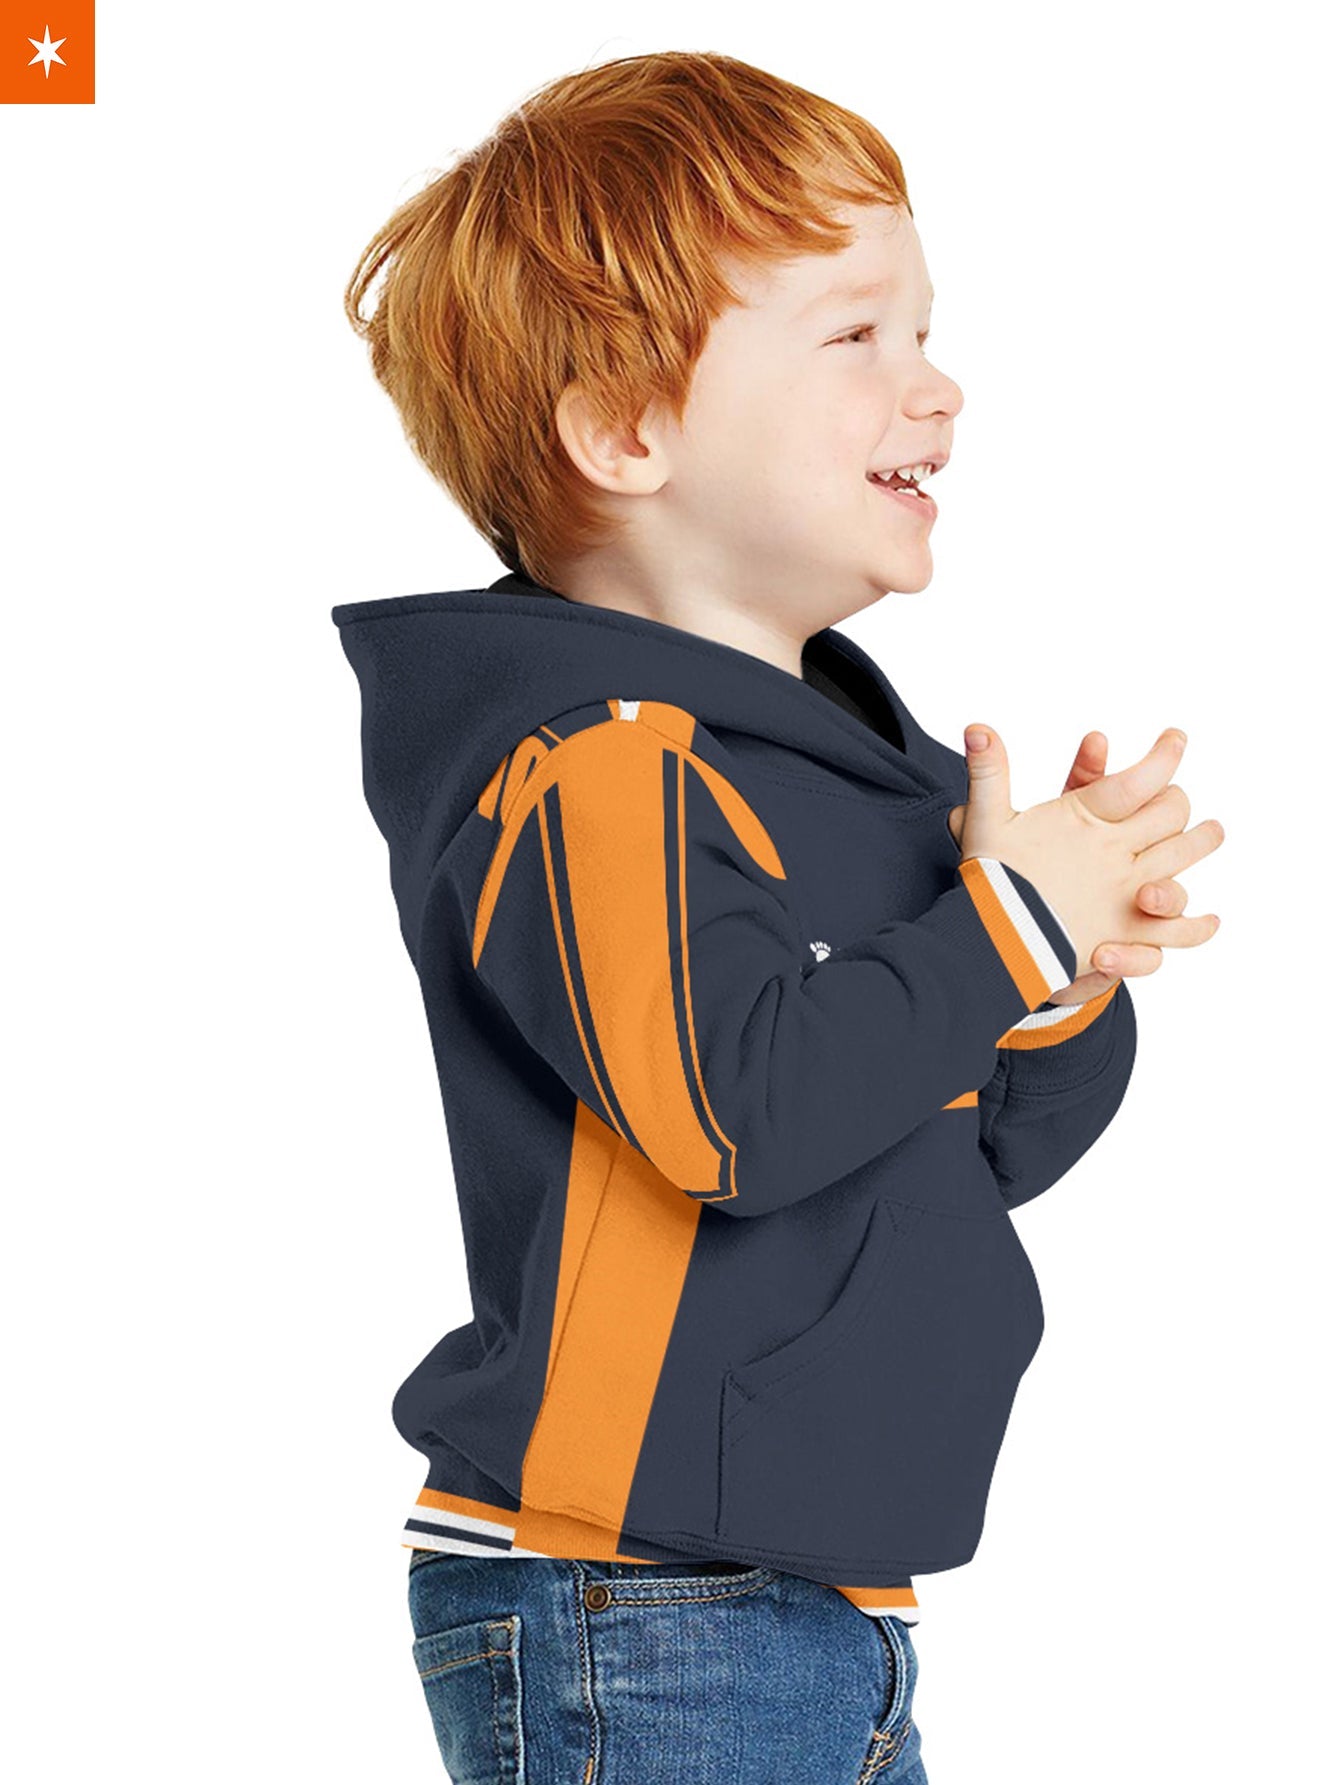 Fandomaniax - Personalized F1 Karasuno Kids Unisex Pullover Hoodie